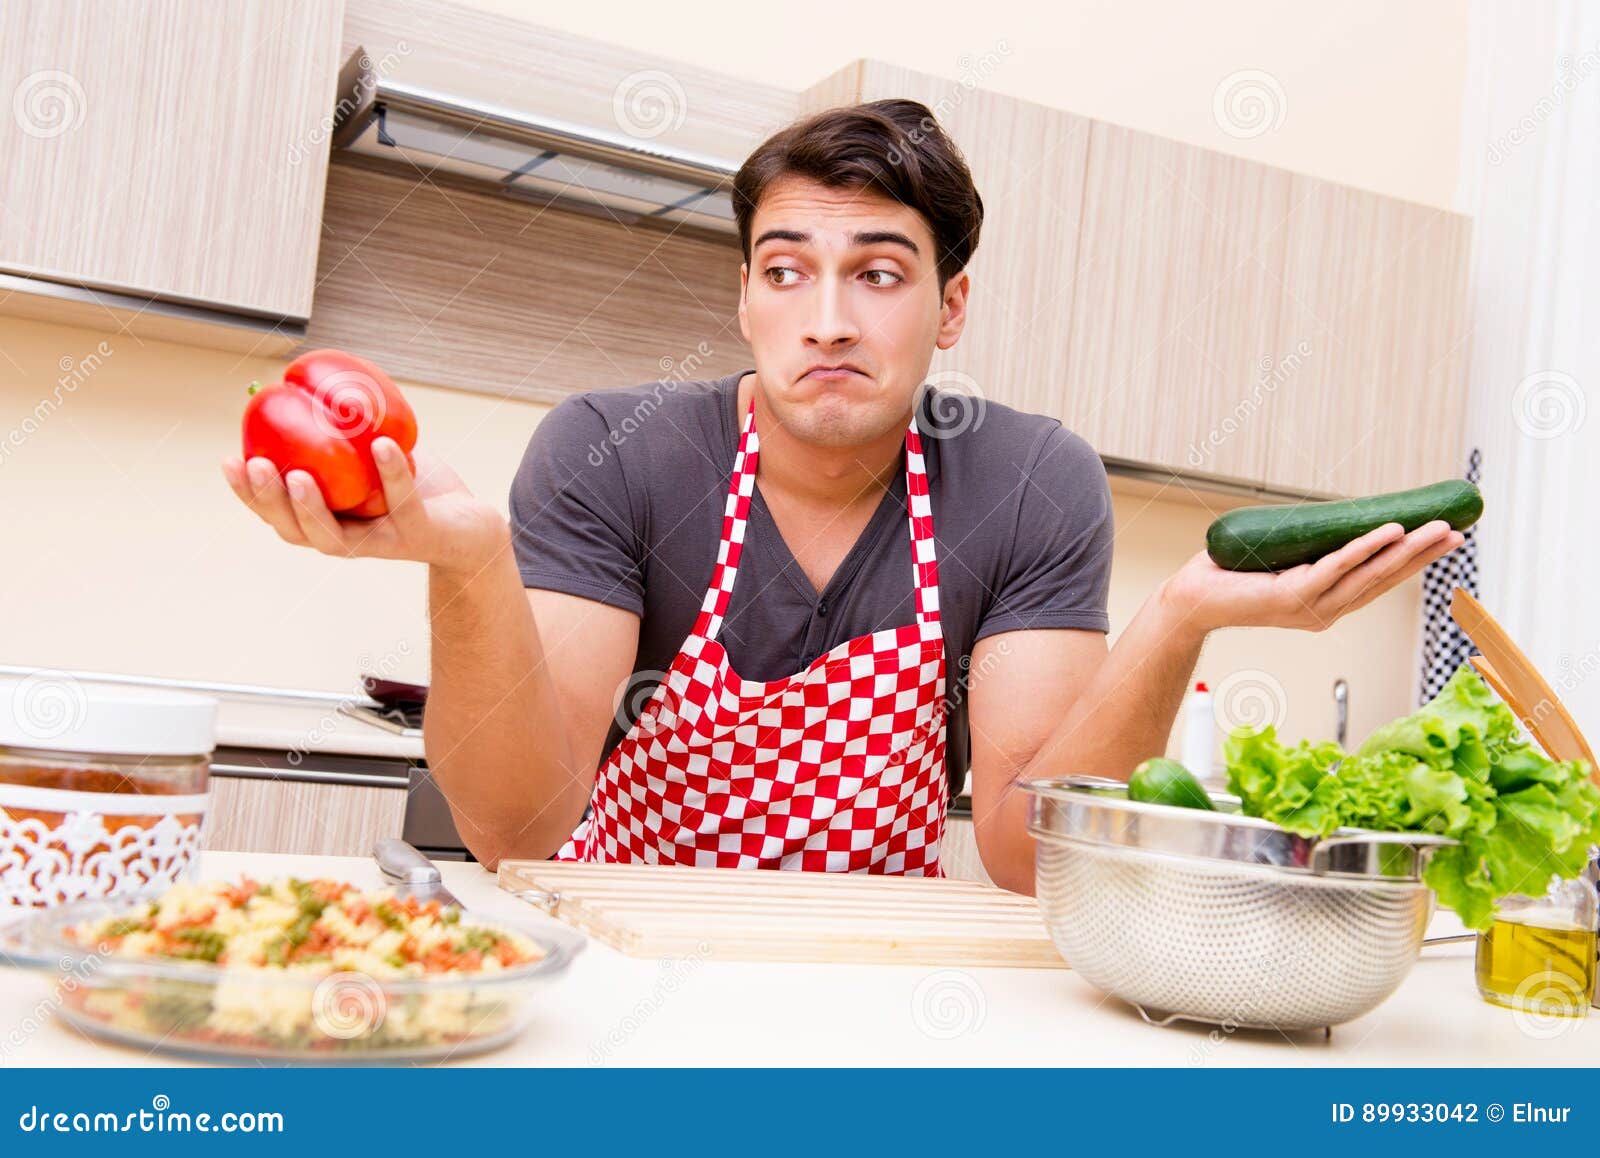 Рецепт приготовления мужчины. Мужчина готовит. Мужчина варит суп. Повар мужчина на кухне. Мужчина готовит на кухне.